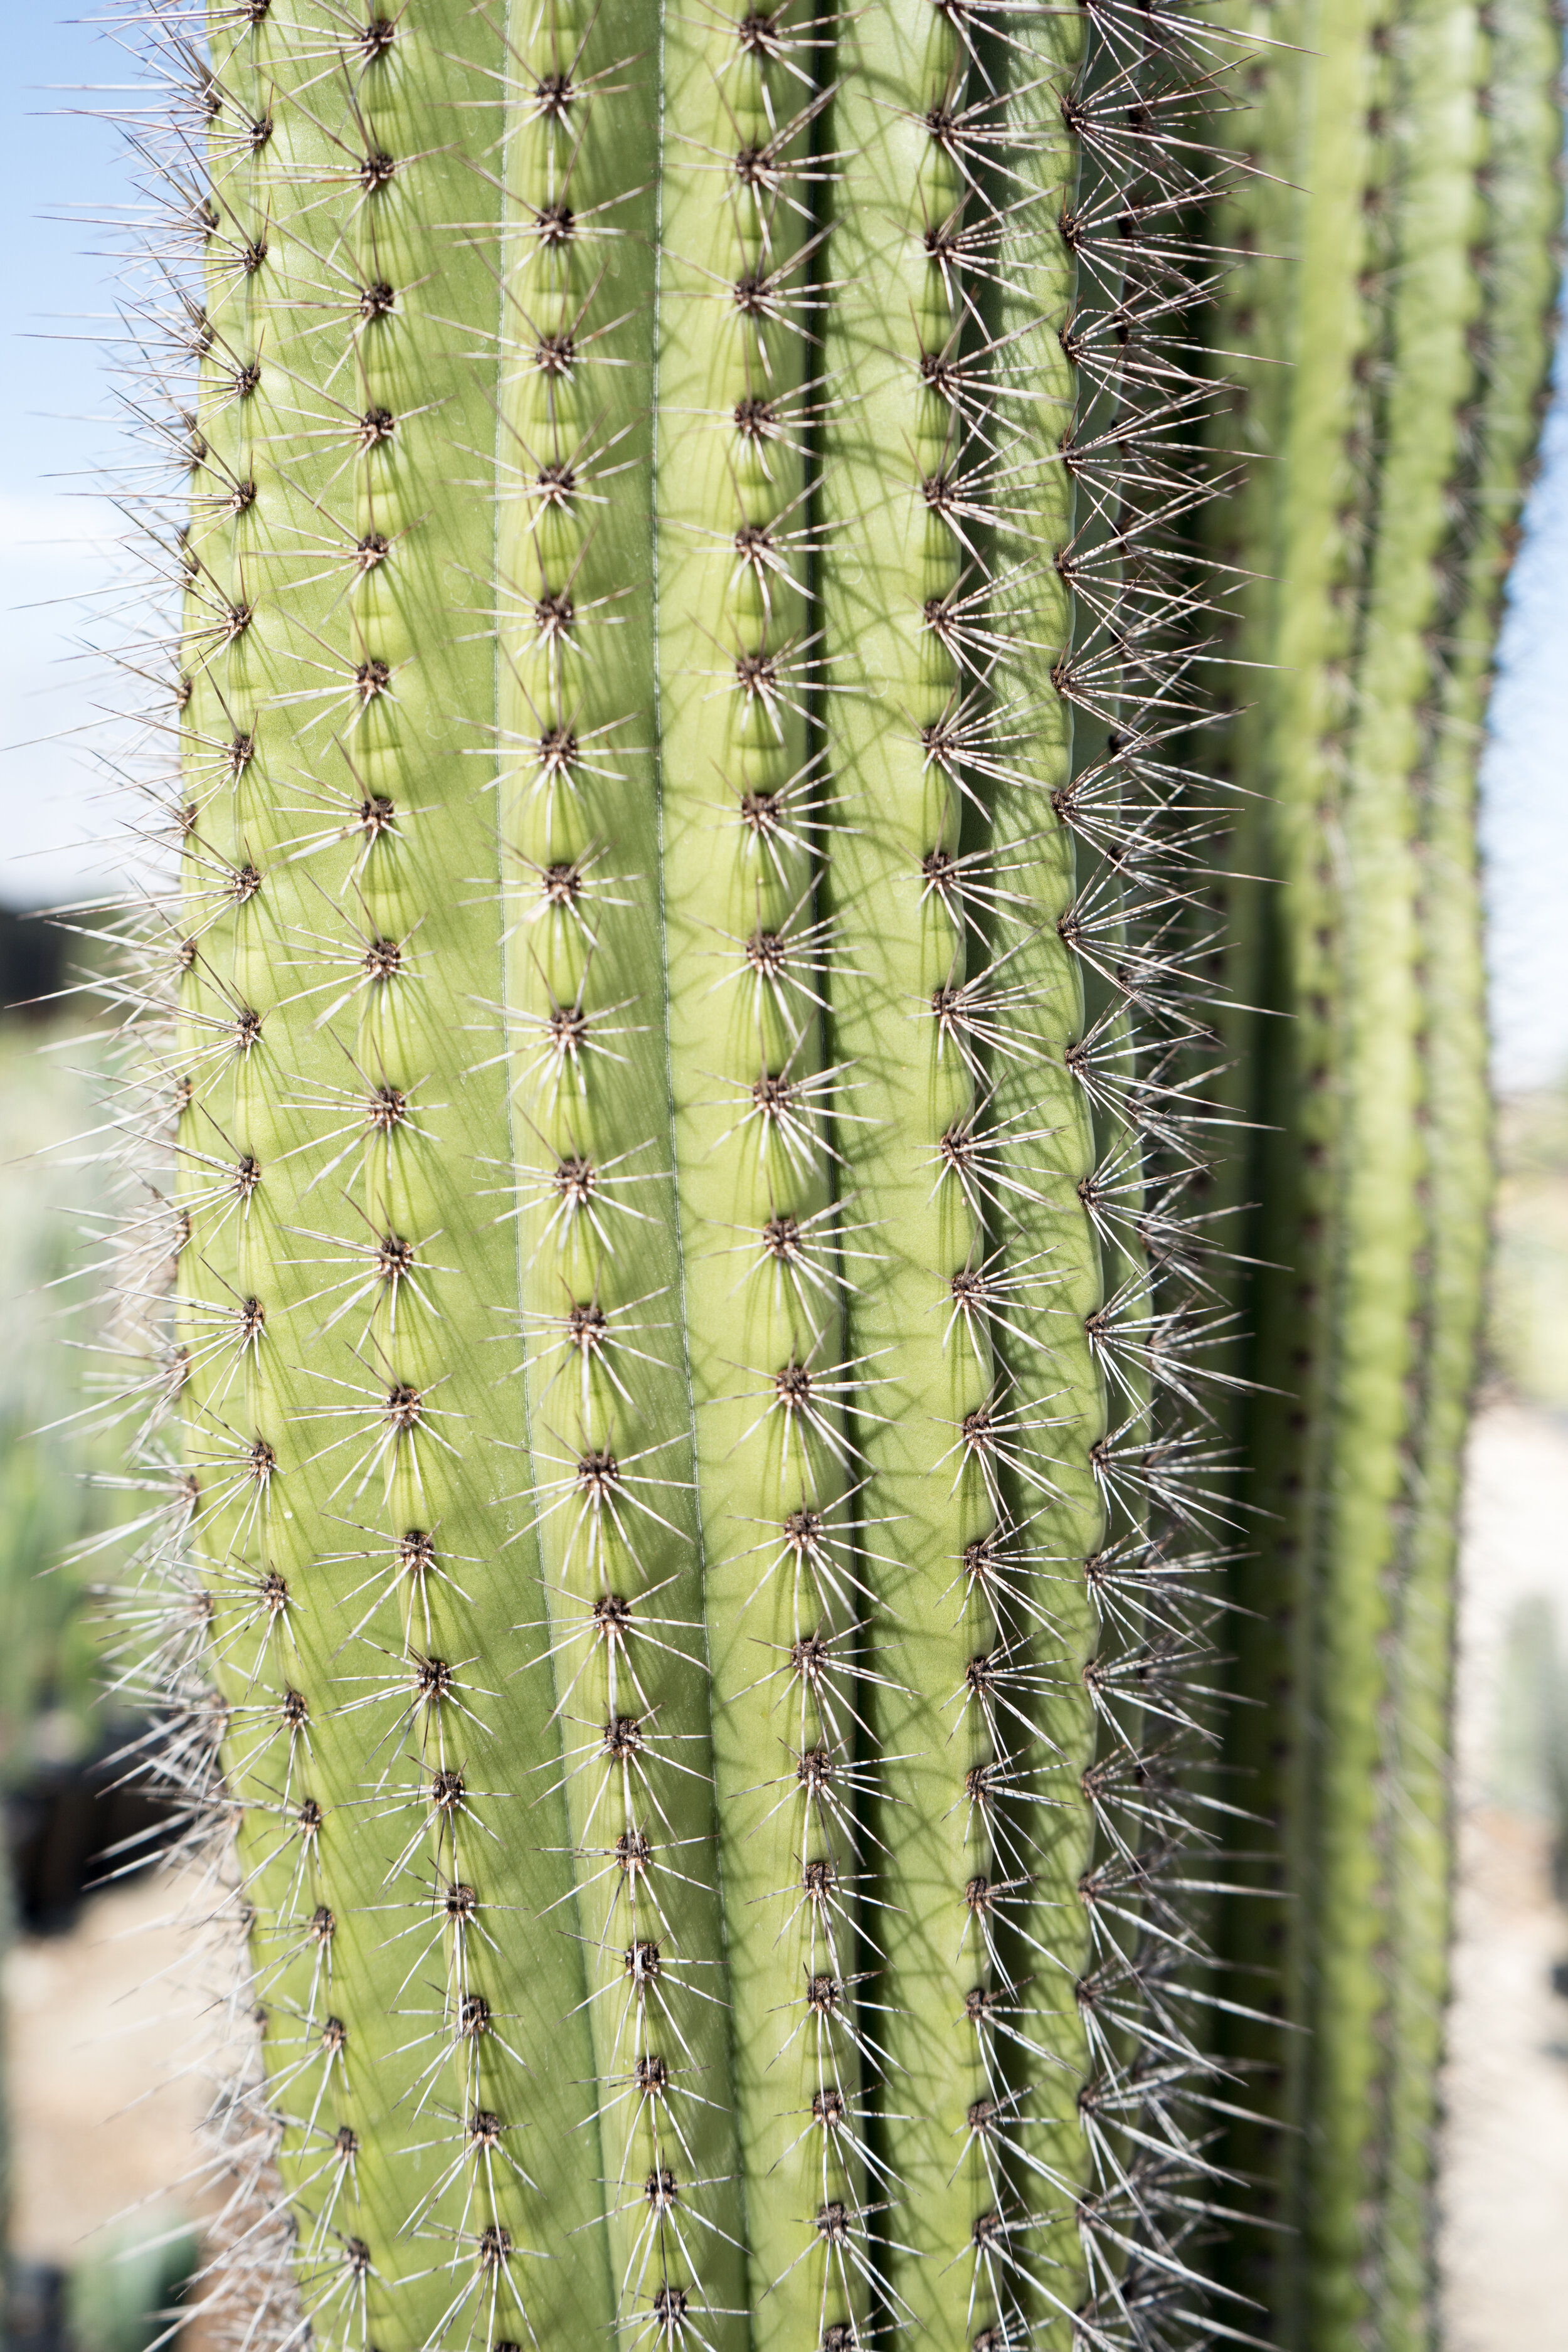 Stenocereus Thurberi (Organ Pipe Cactus) in detail